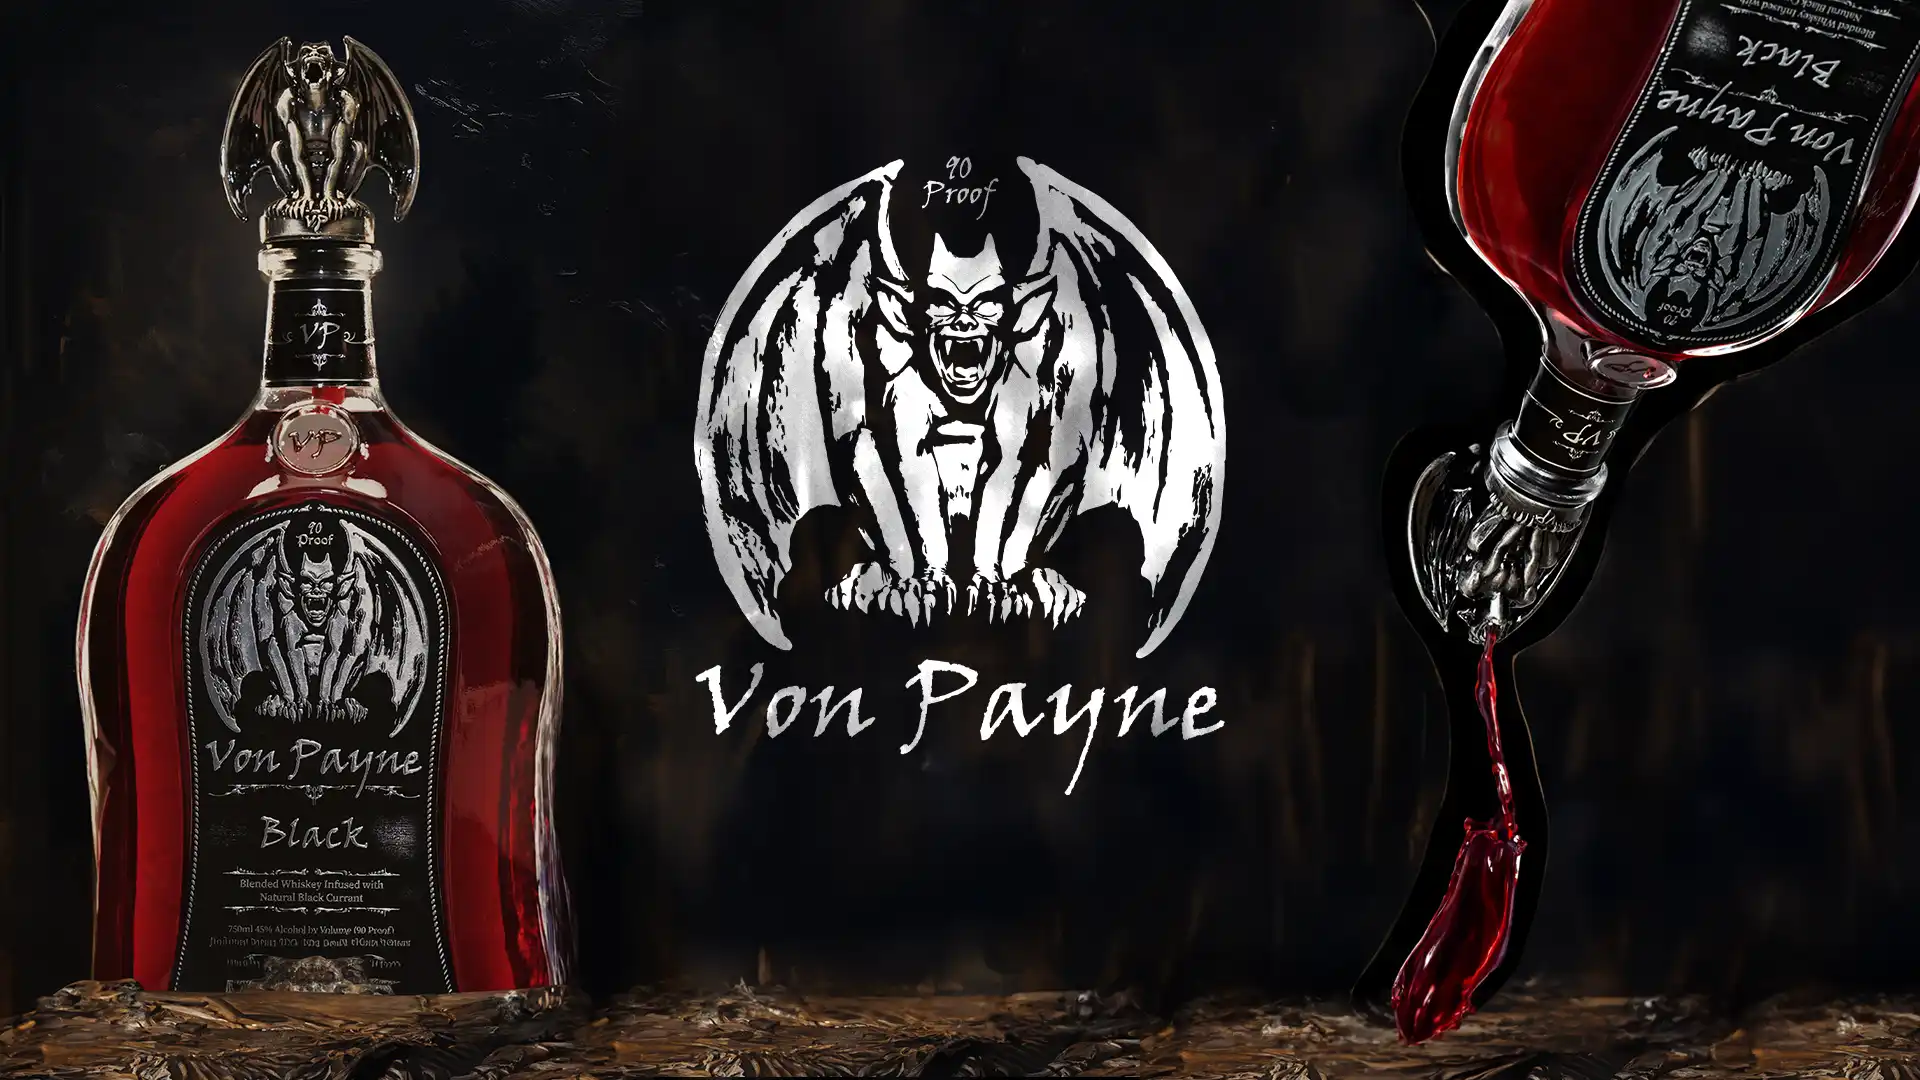 Buy Von Payne Black from VonPayne.com